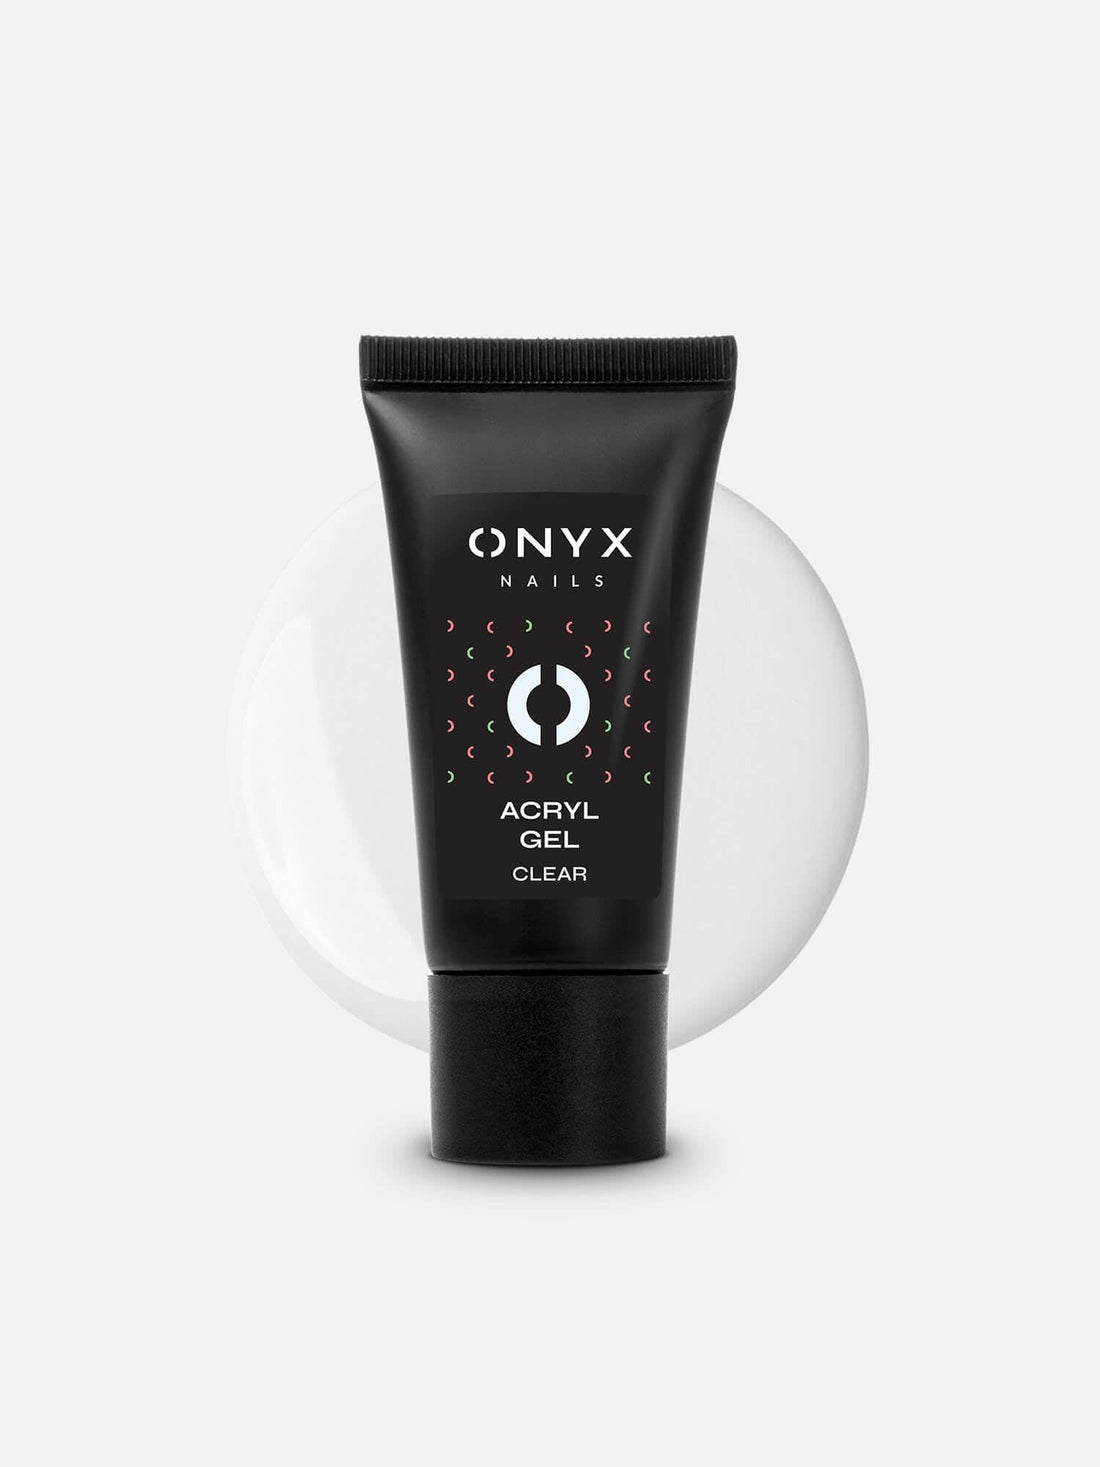 Onyx Nails AcrylGel Clear 60 g